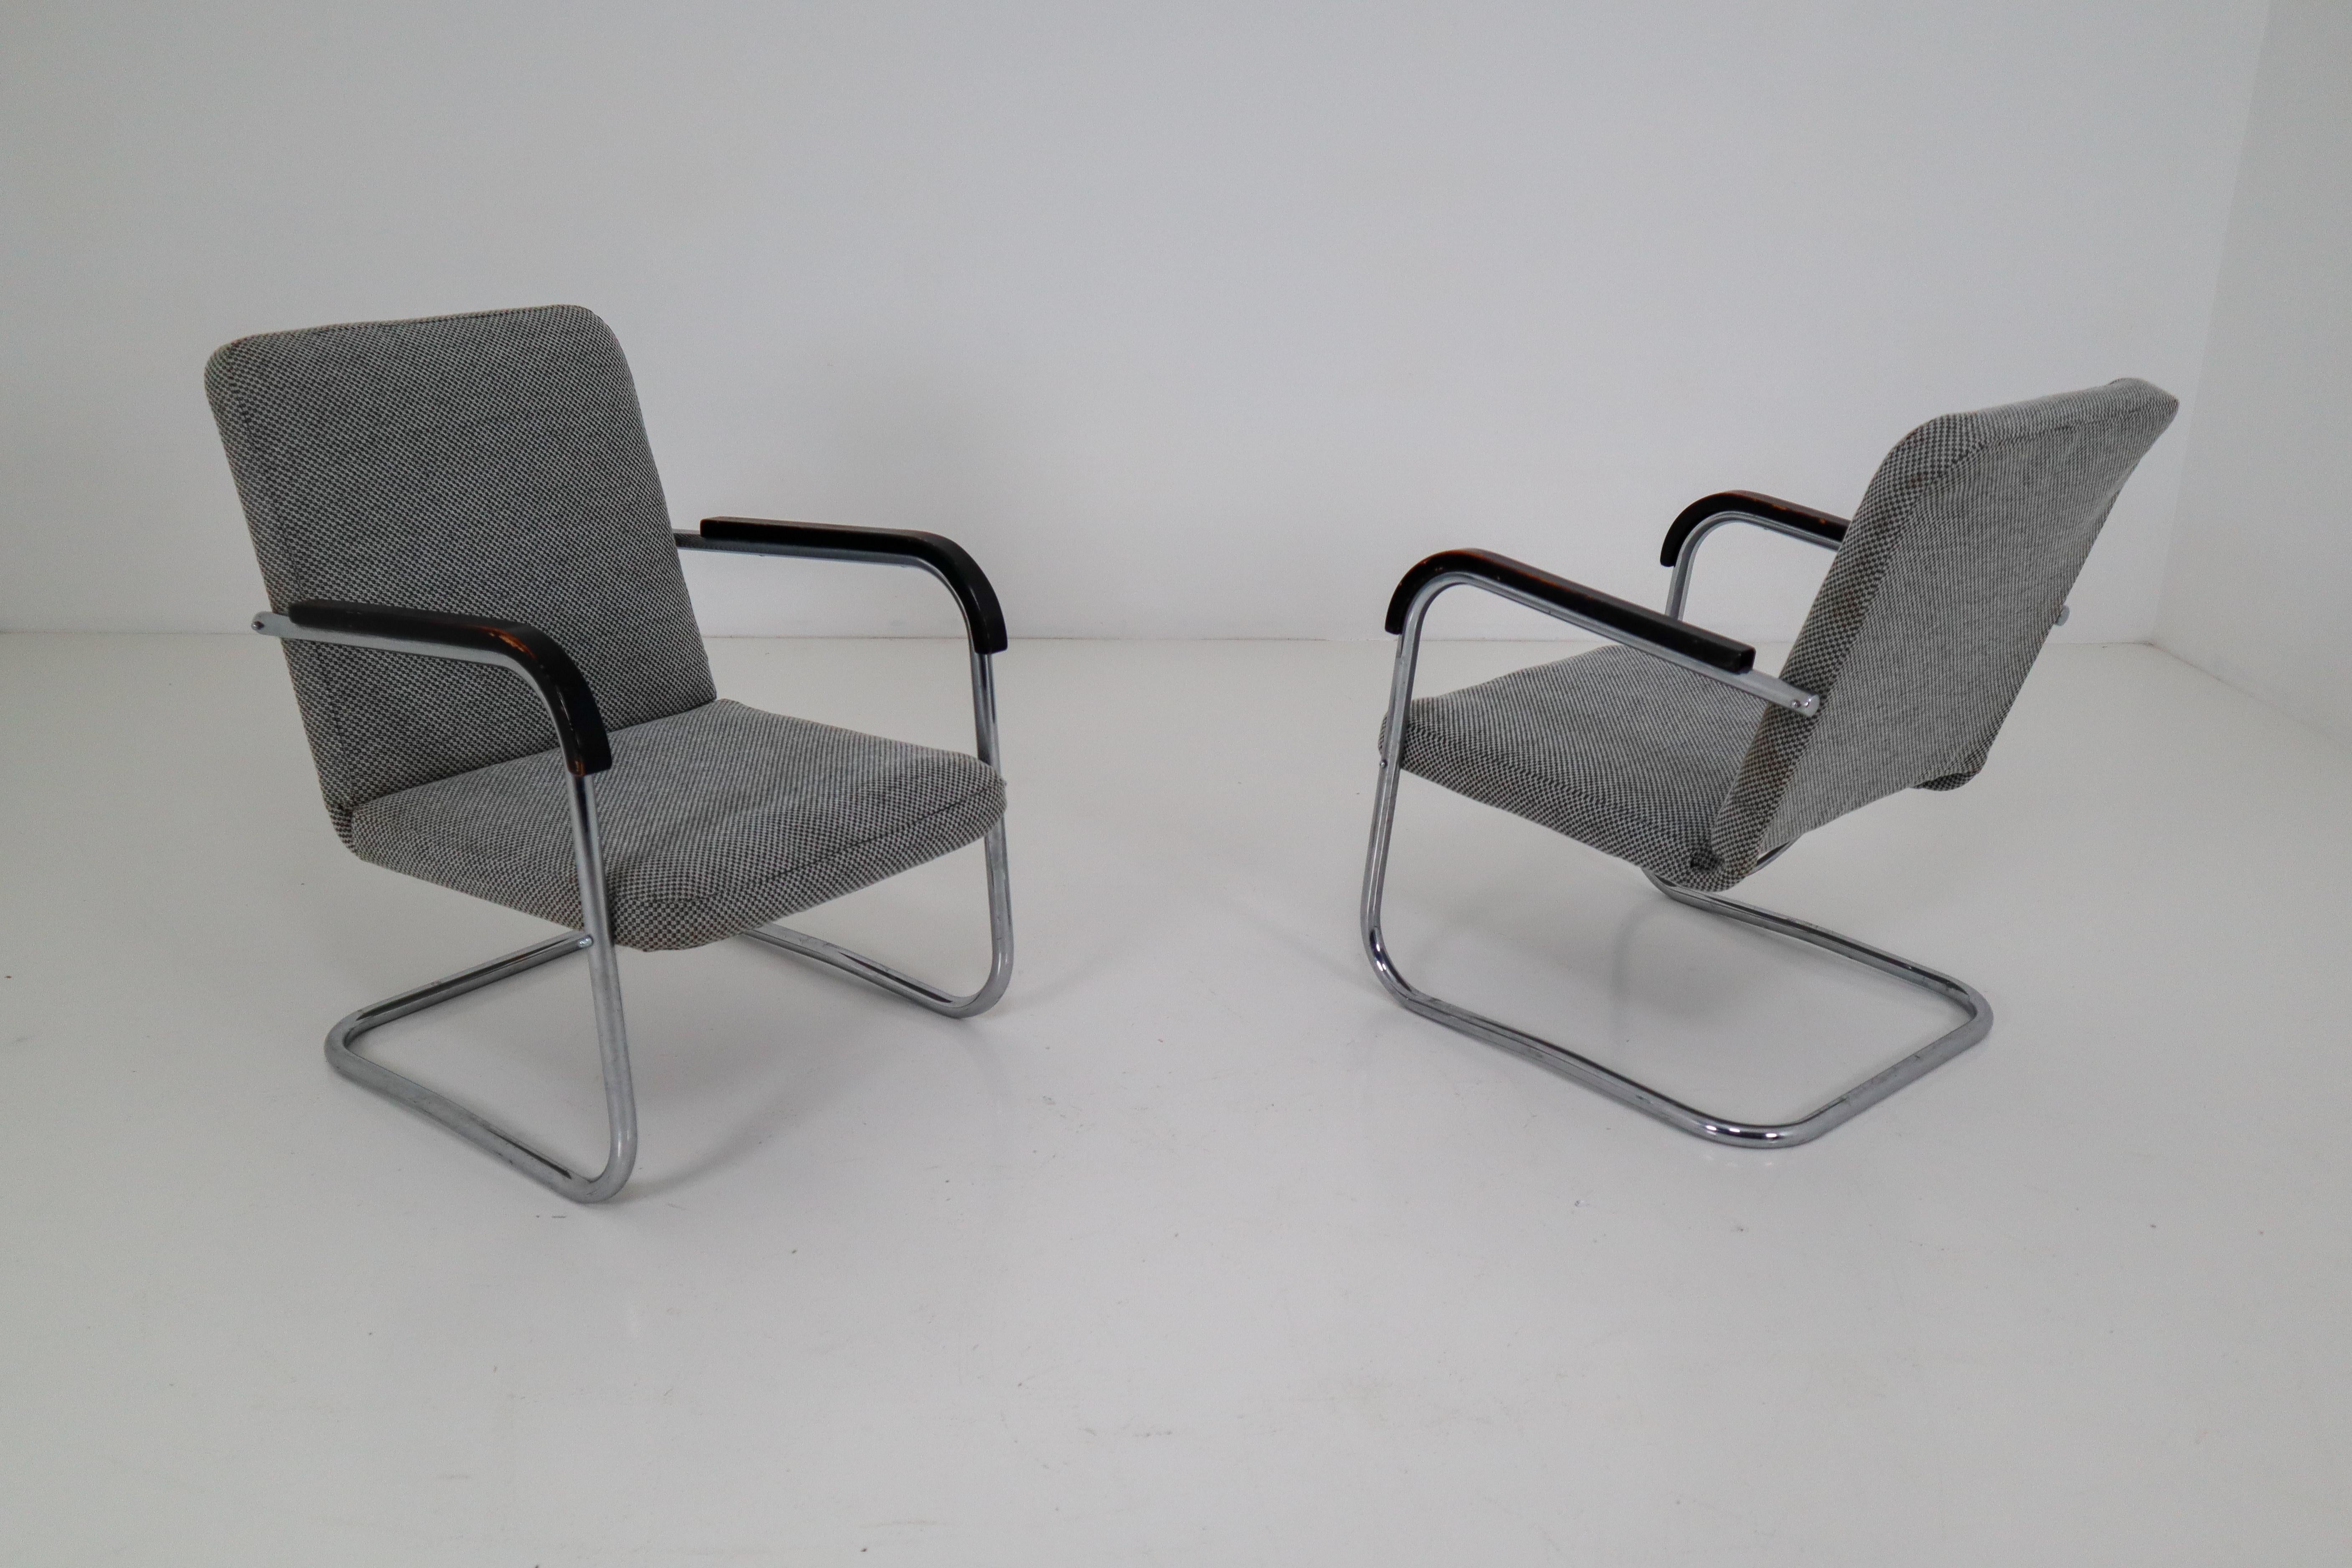 Mid-20th Century Pair of Chrome Steel Armchairs by Thonet circa 1930s Midcentury Bauhaus Period